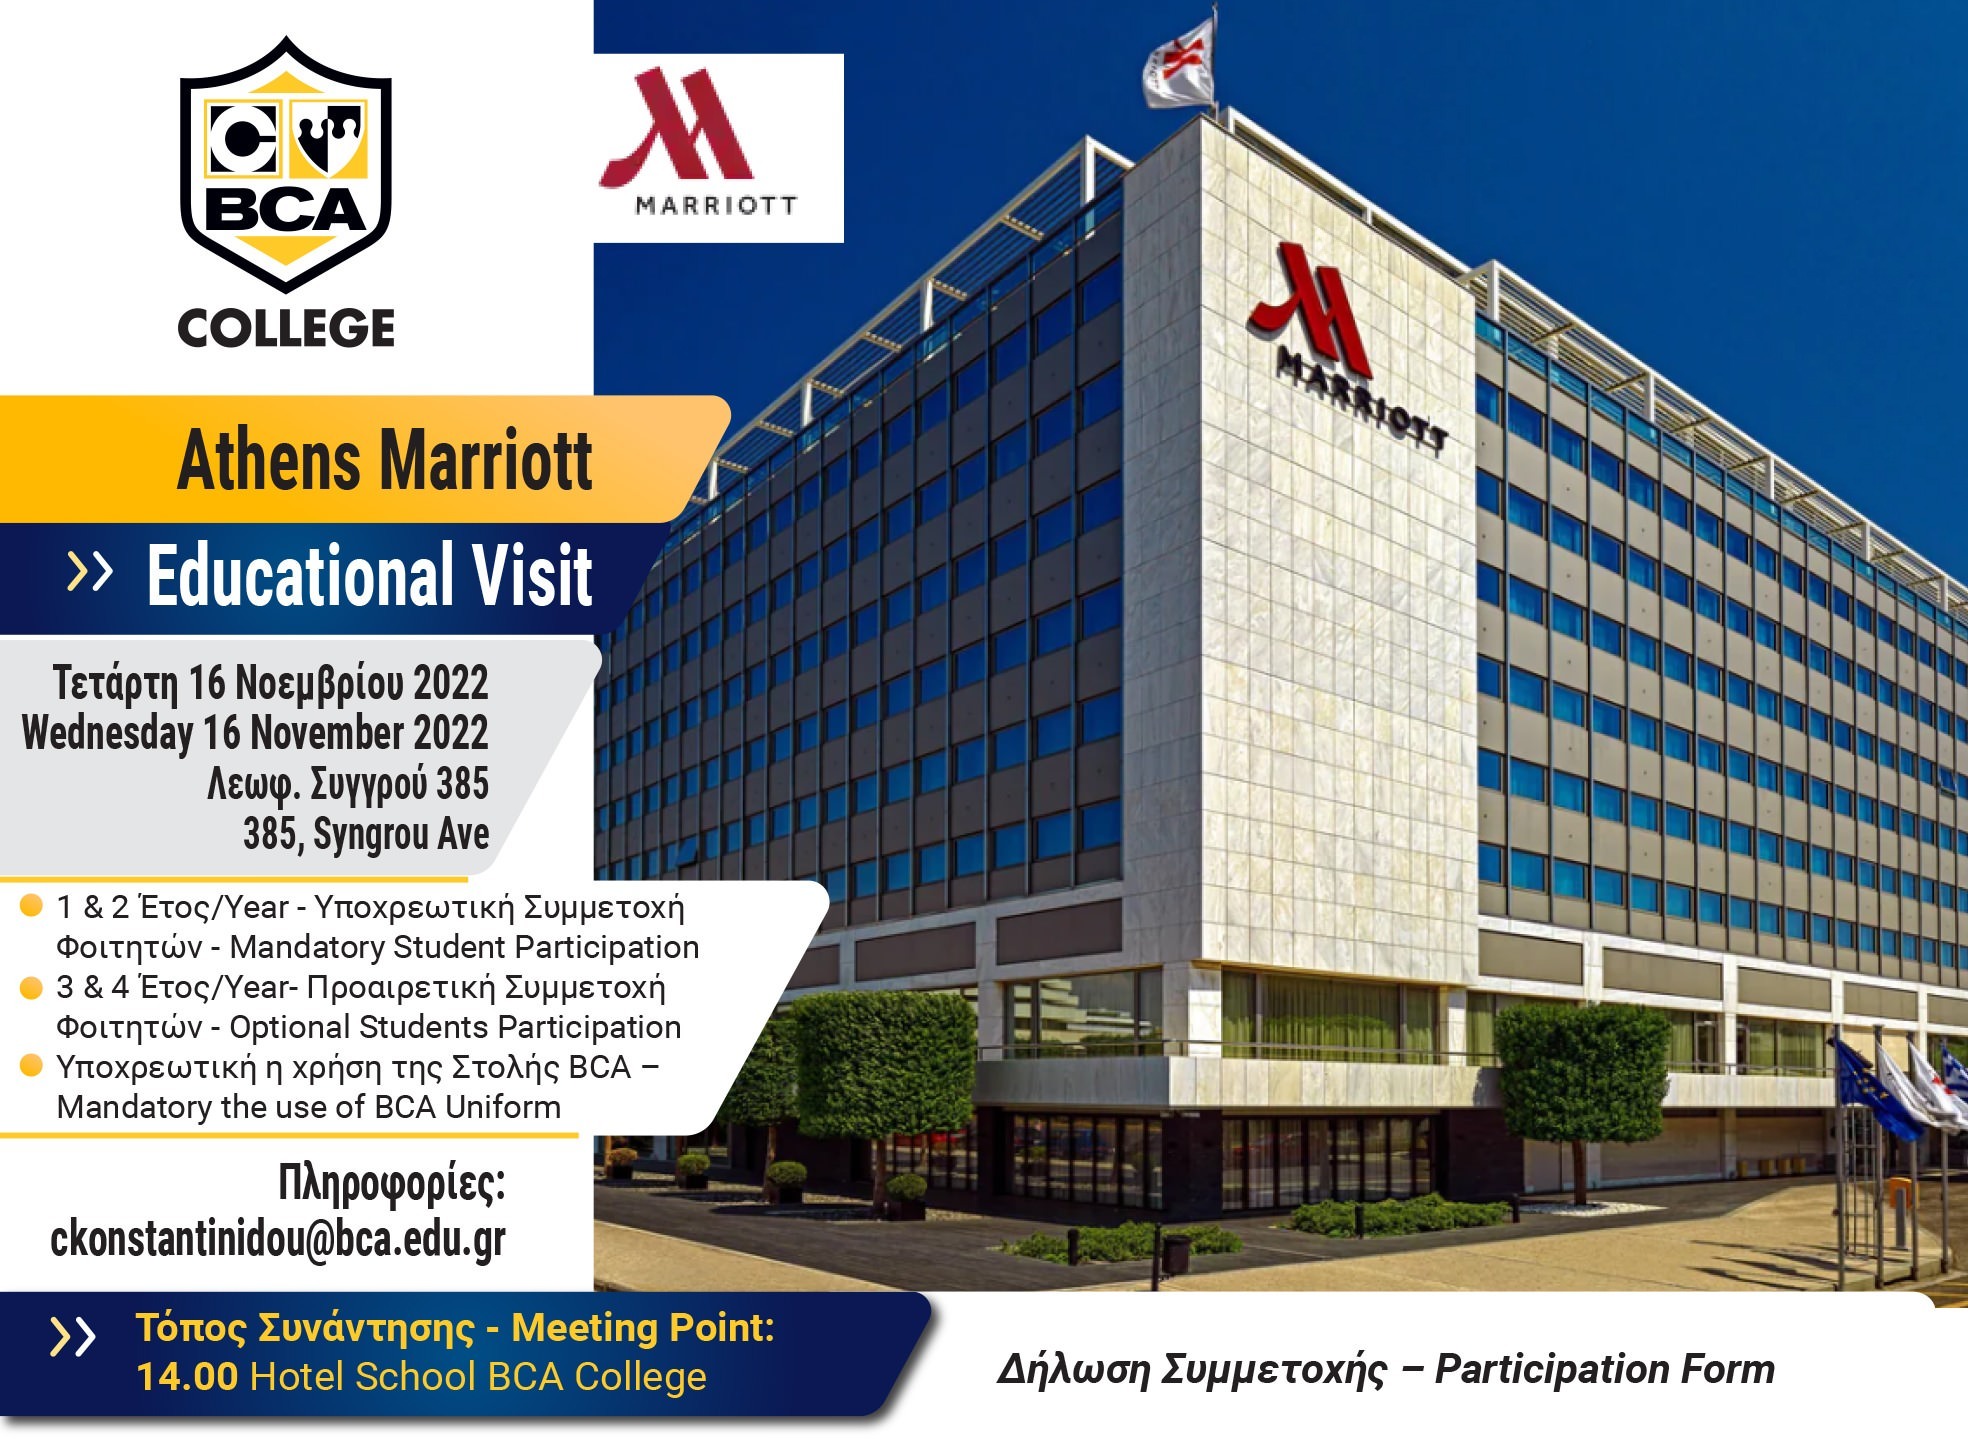 Athens Marriott 2 11 2022 education visit 3